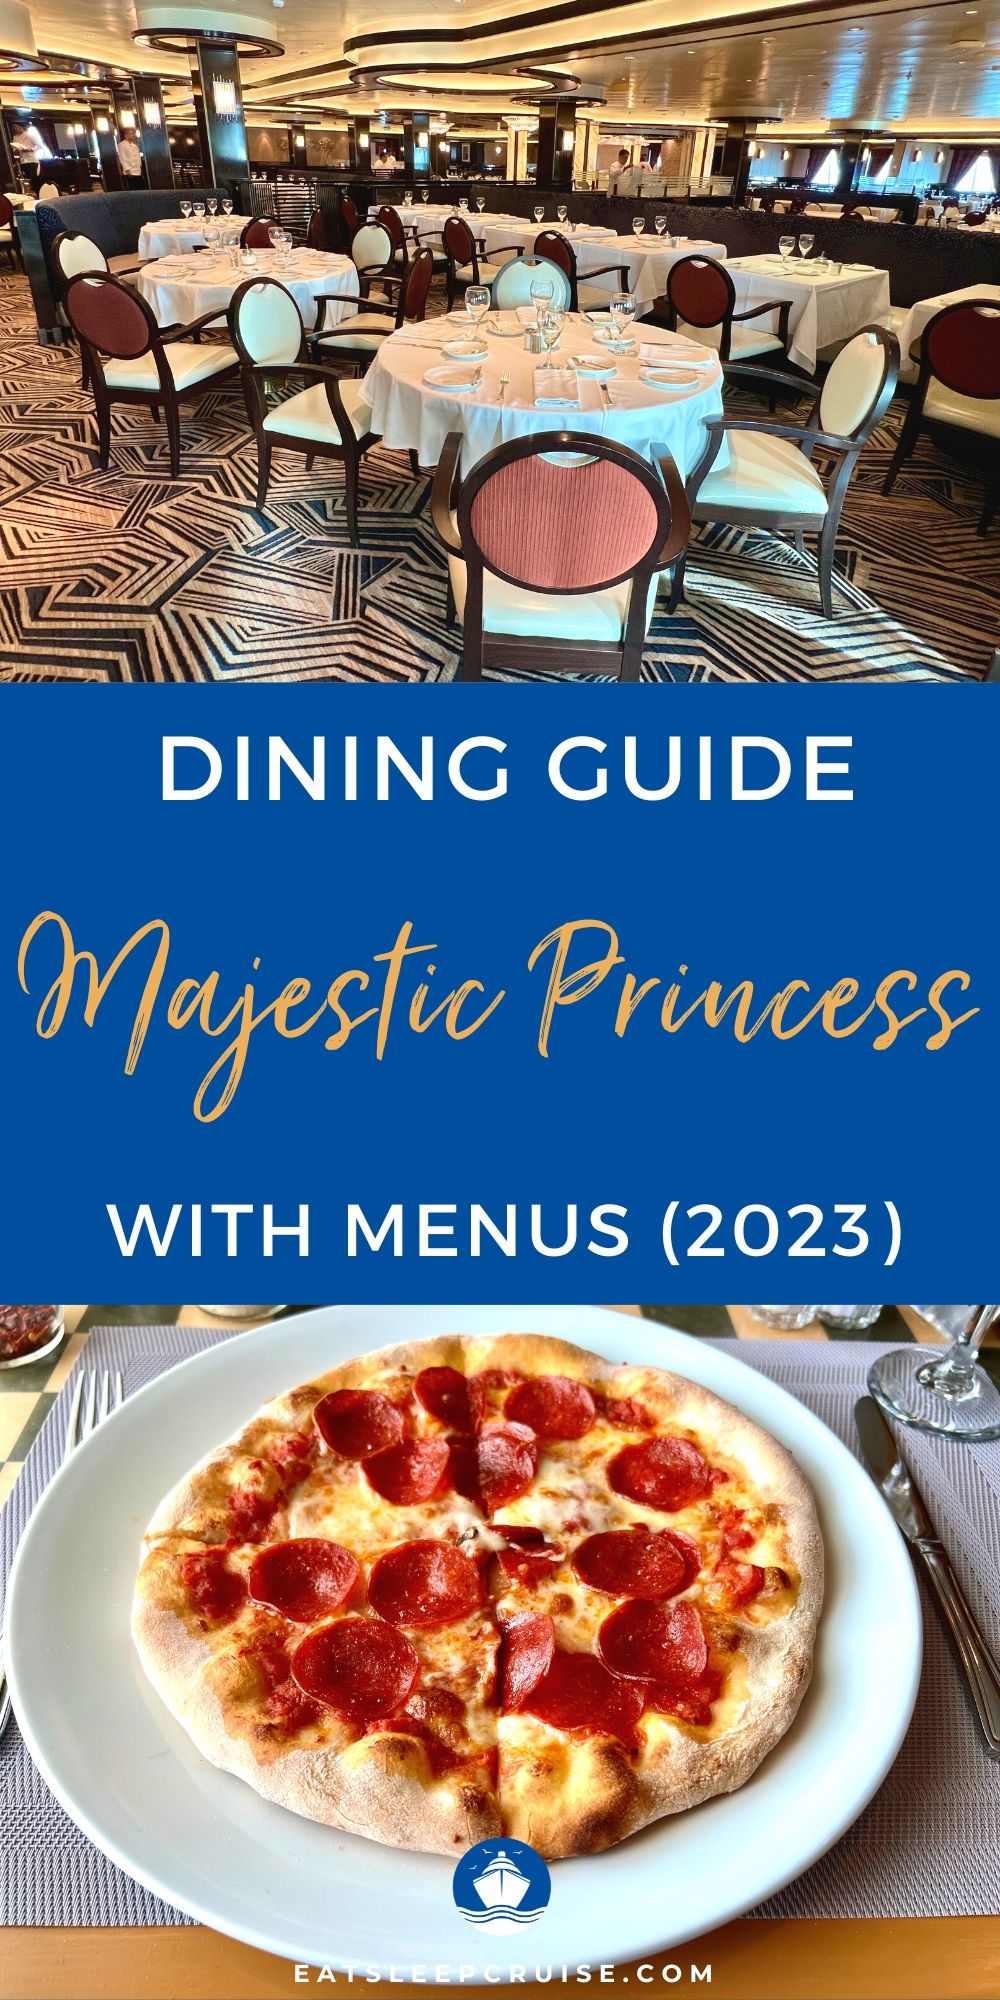 Majestic Princess Restaurant Menus and Dining Guide (2023)